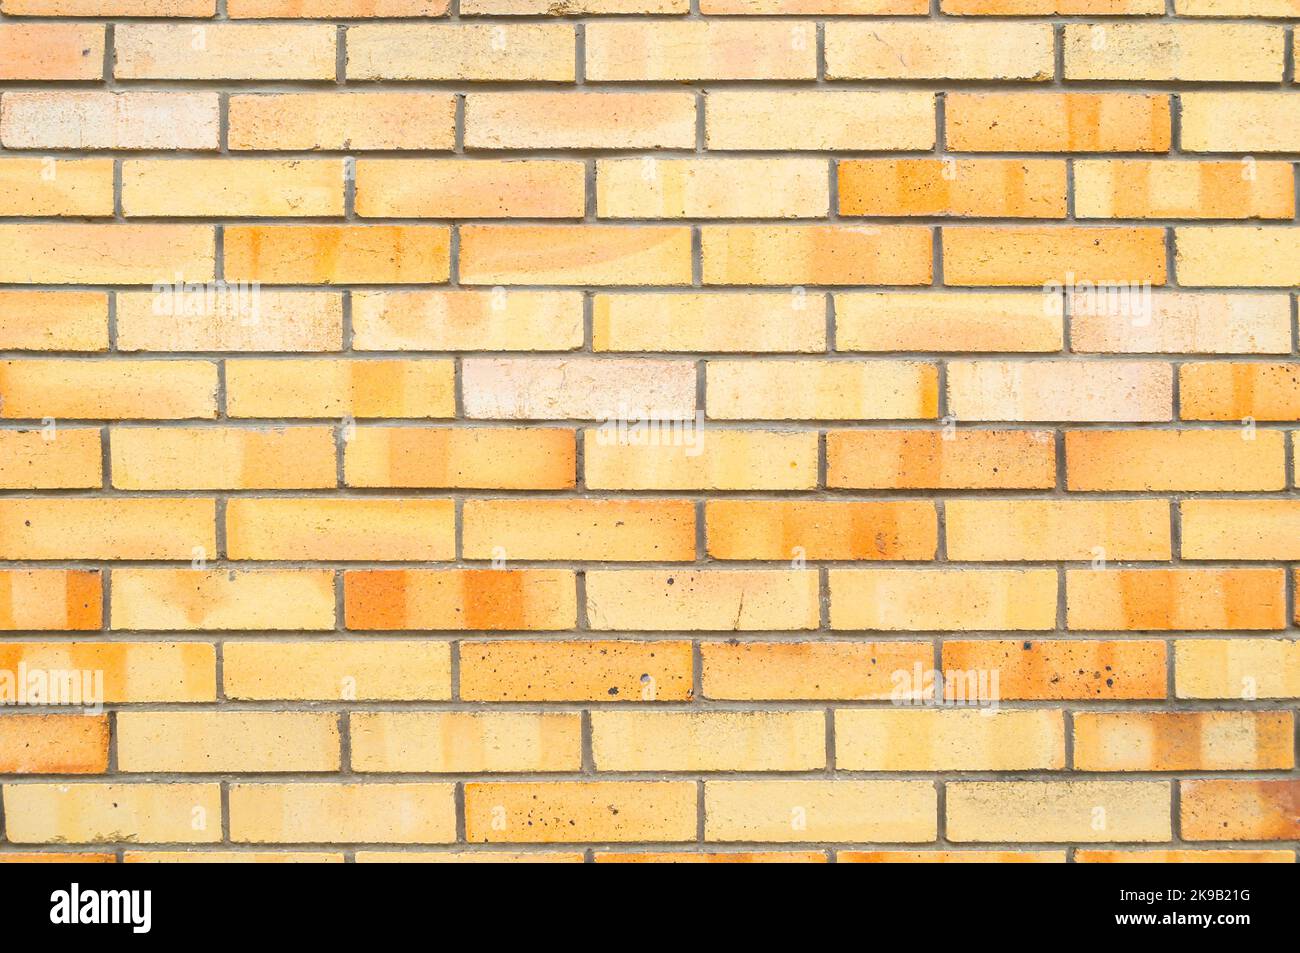 Brick wall background, new red bricks wall pattern. Texture brick wall of orange color Stock Photo